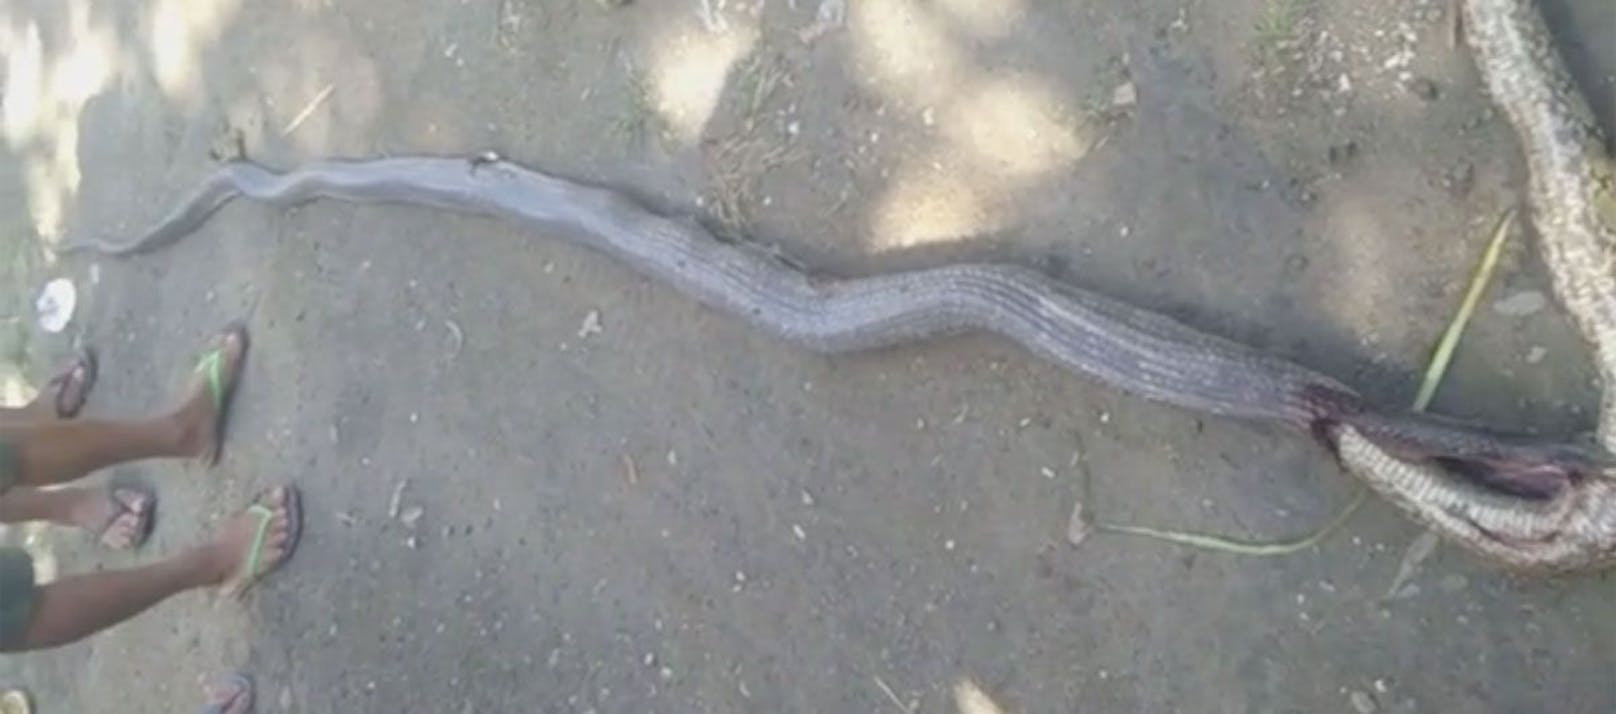 Die Cobra soll vier Meter messen, während die Python drei Meter lang ist.